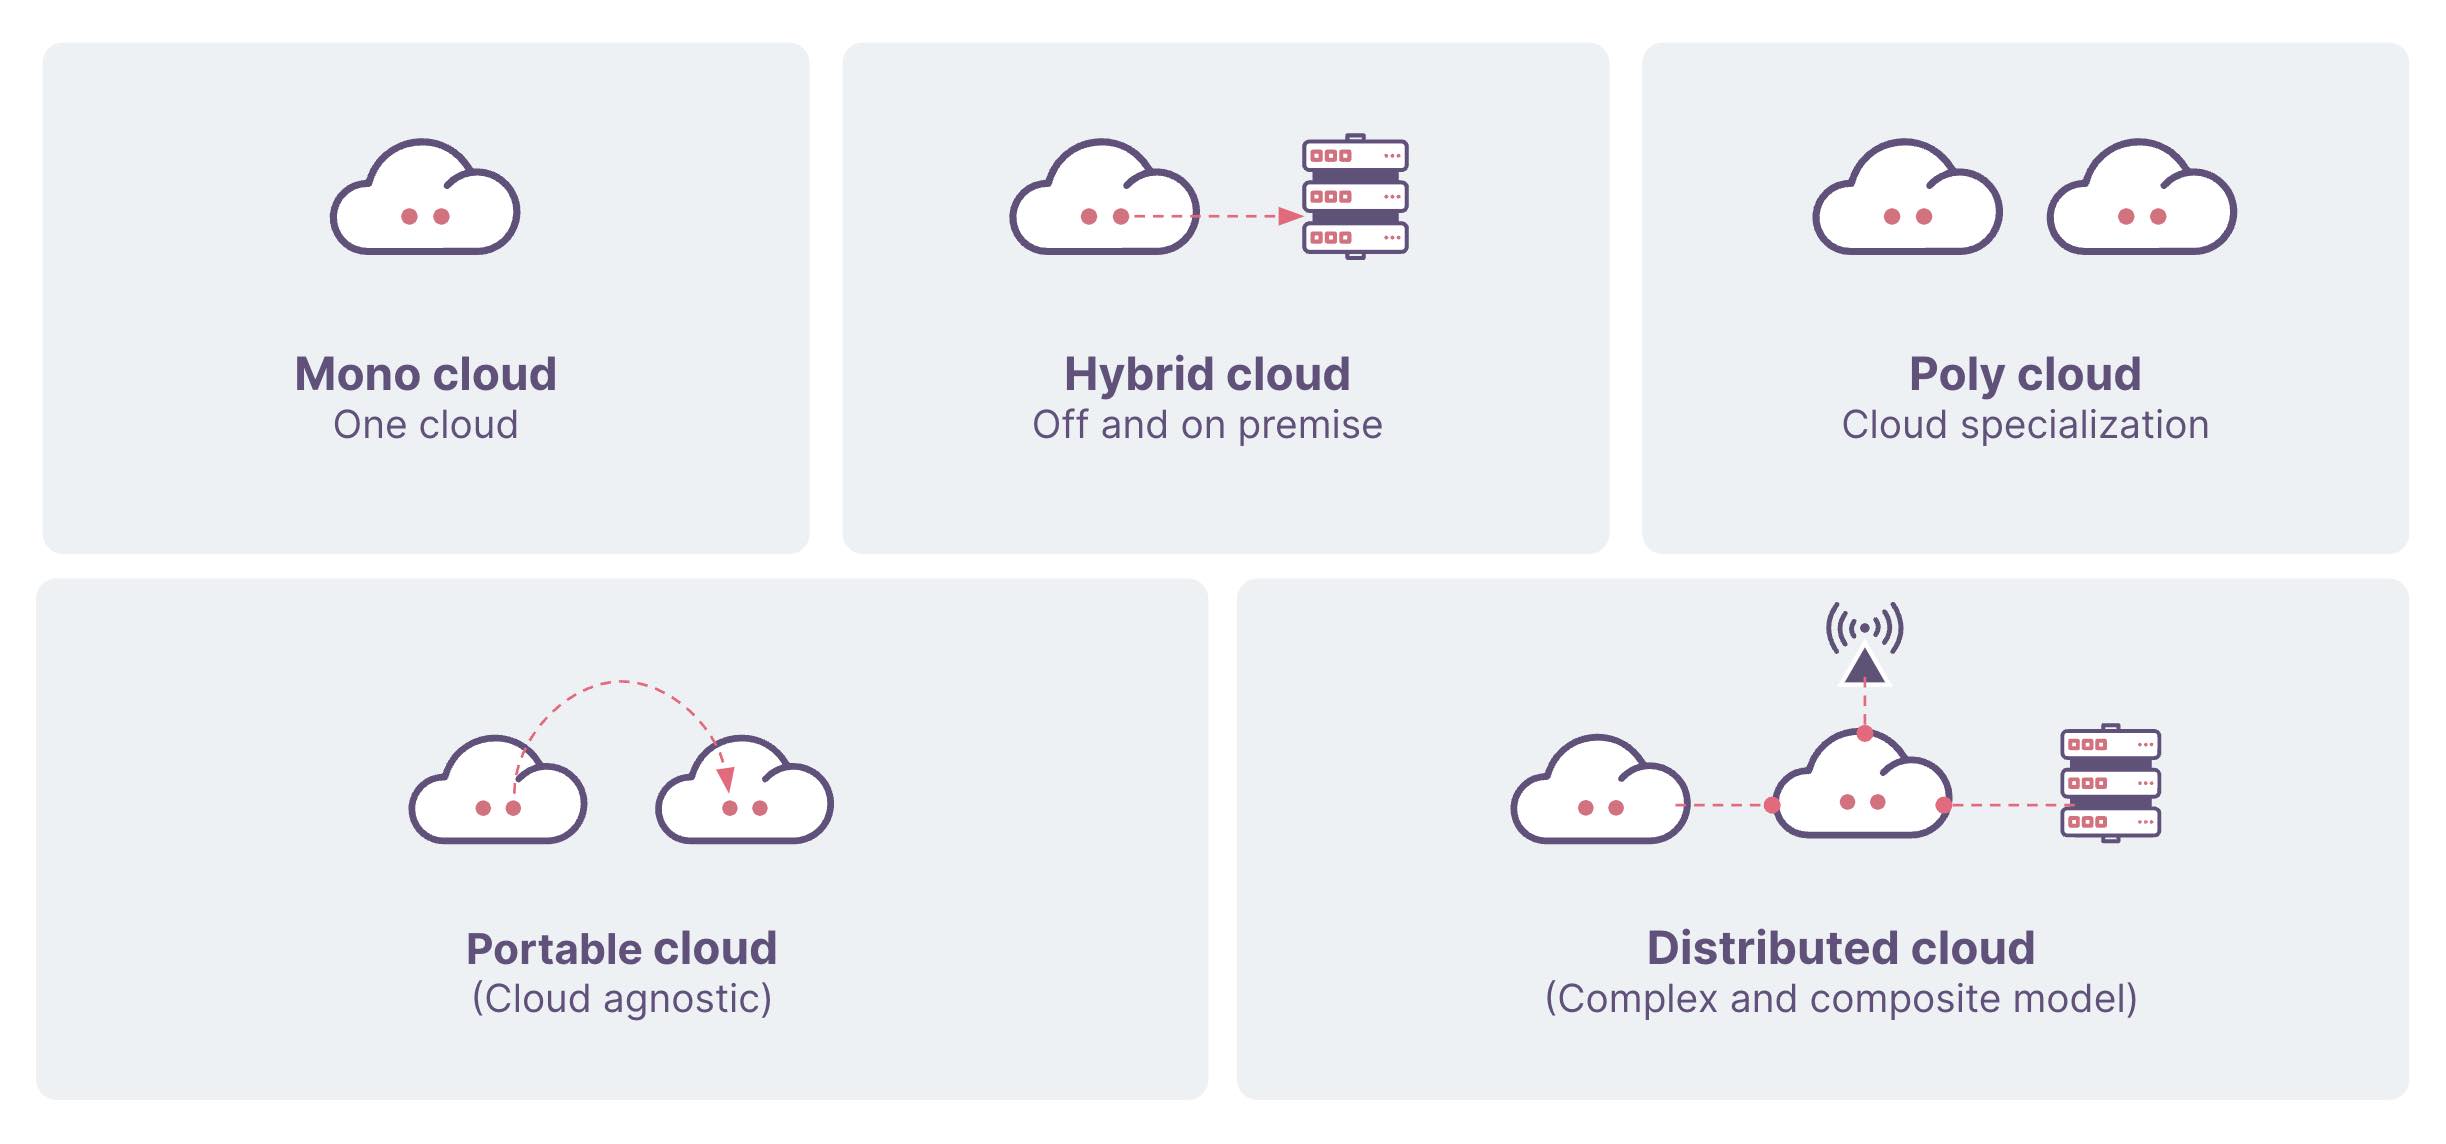 The five kinds of cloud models